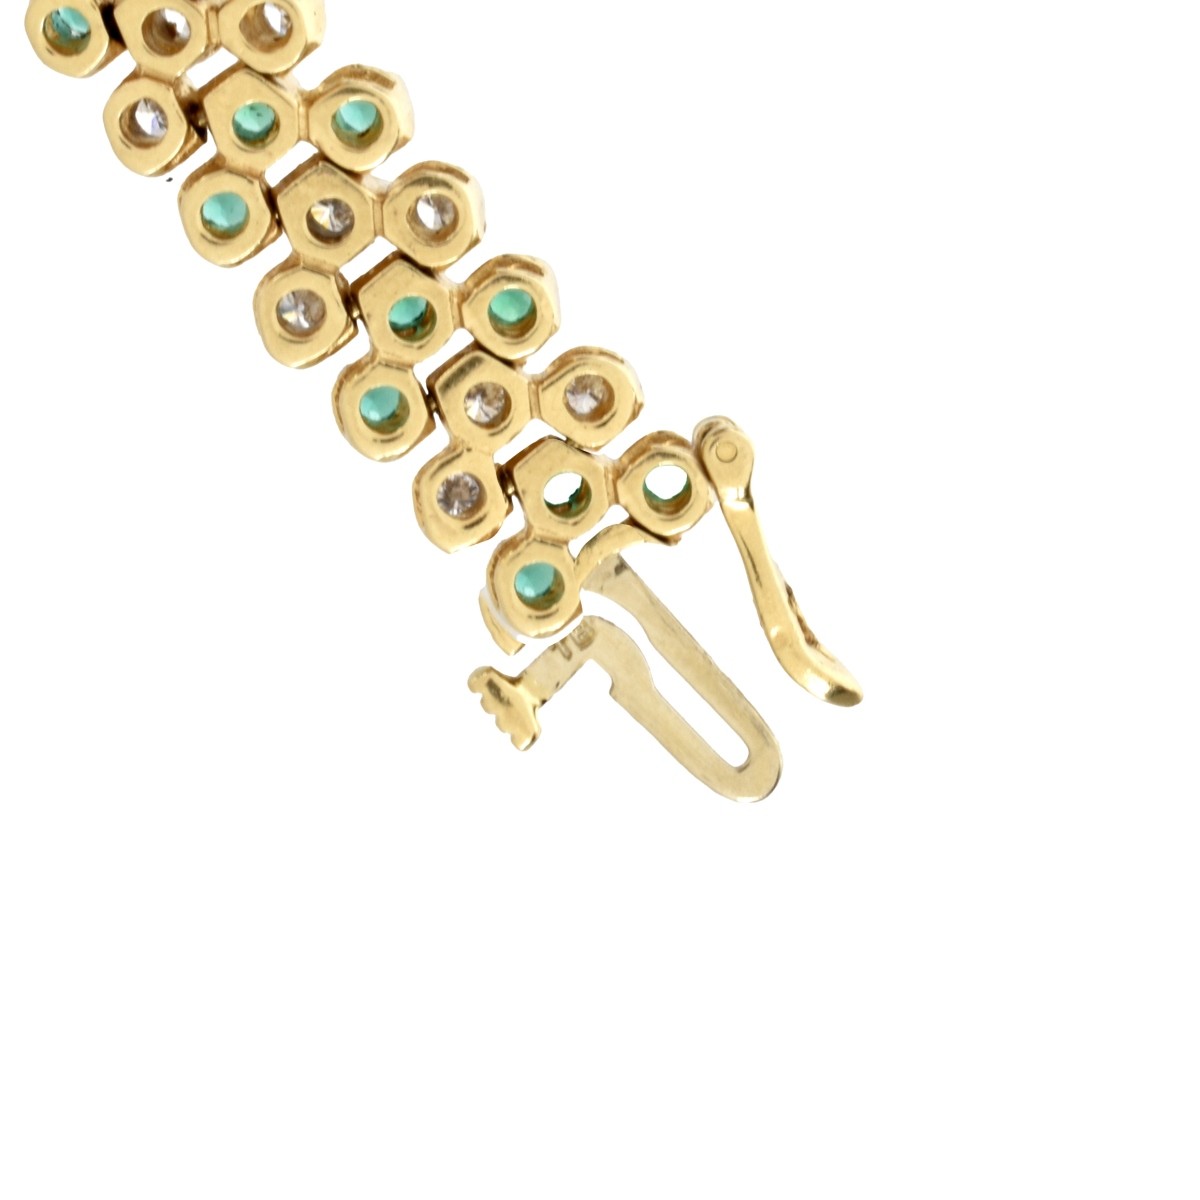 Diamond, Emerald and 18K Necklace